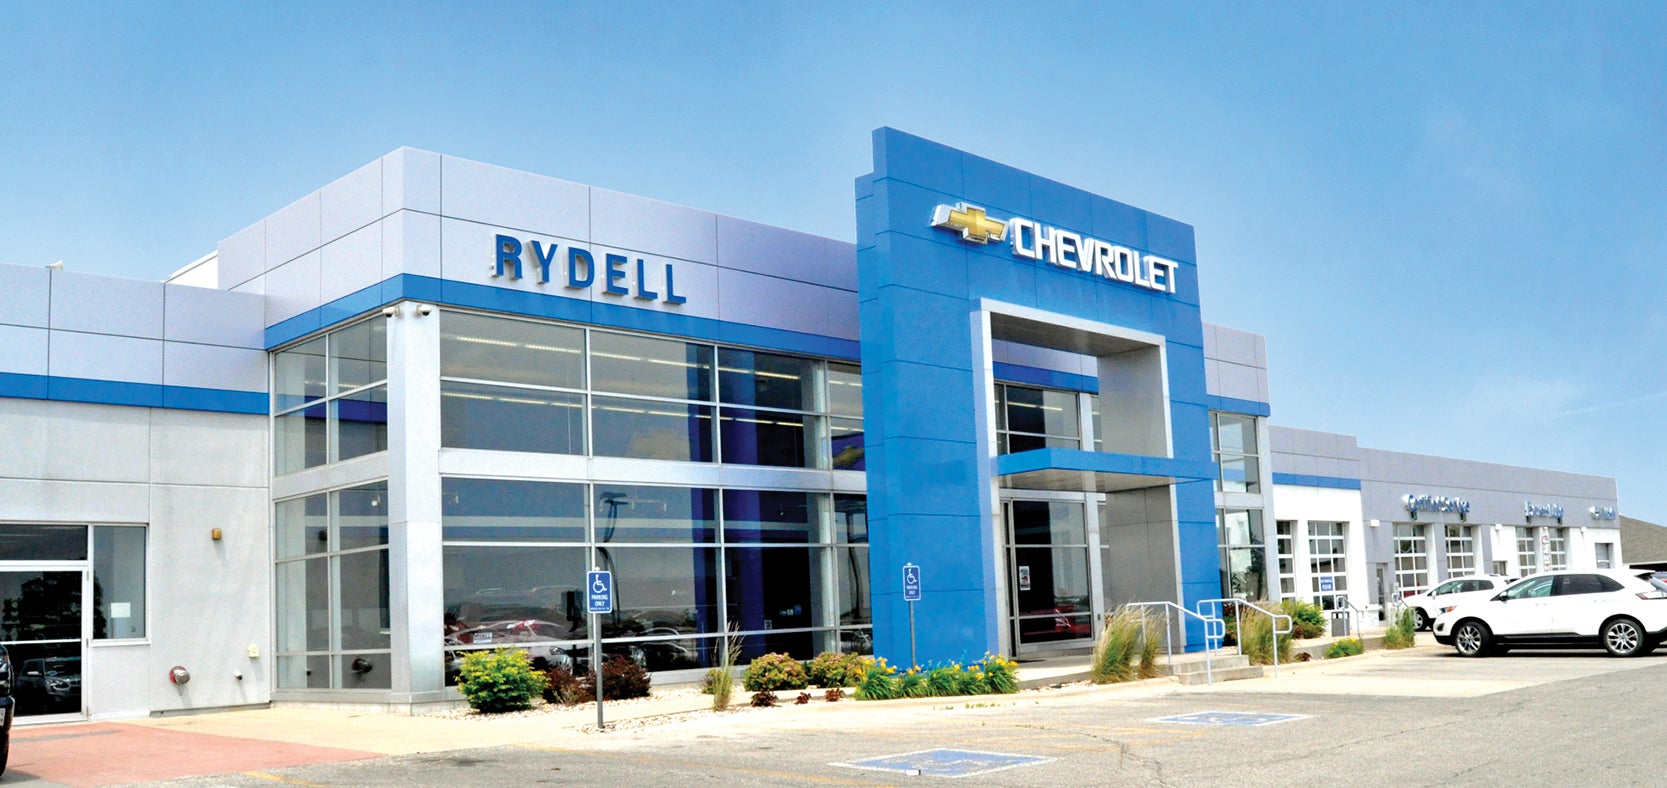 Rydell Chevrolet Building